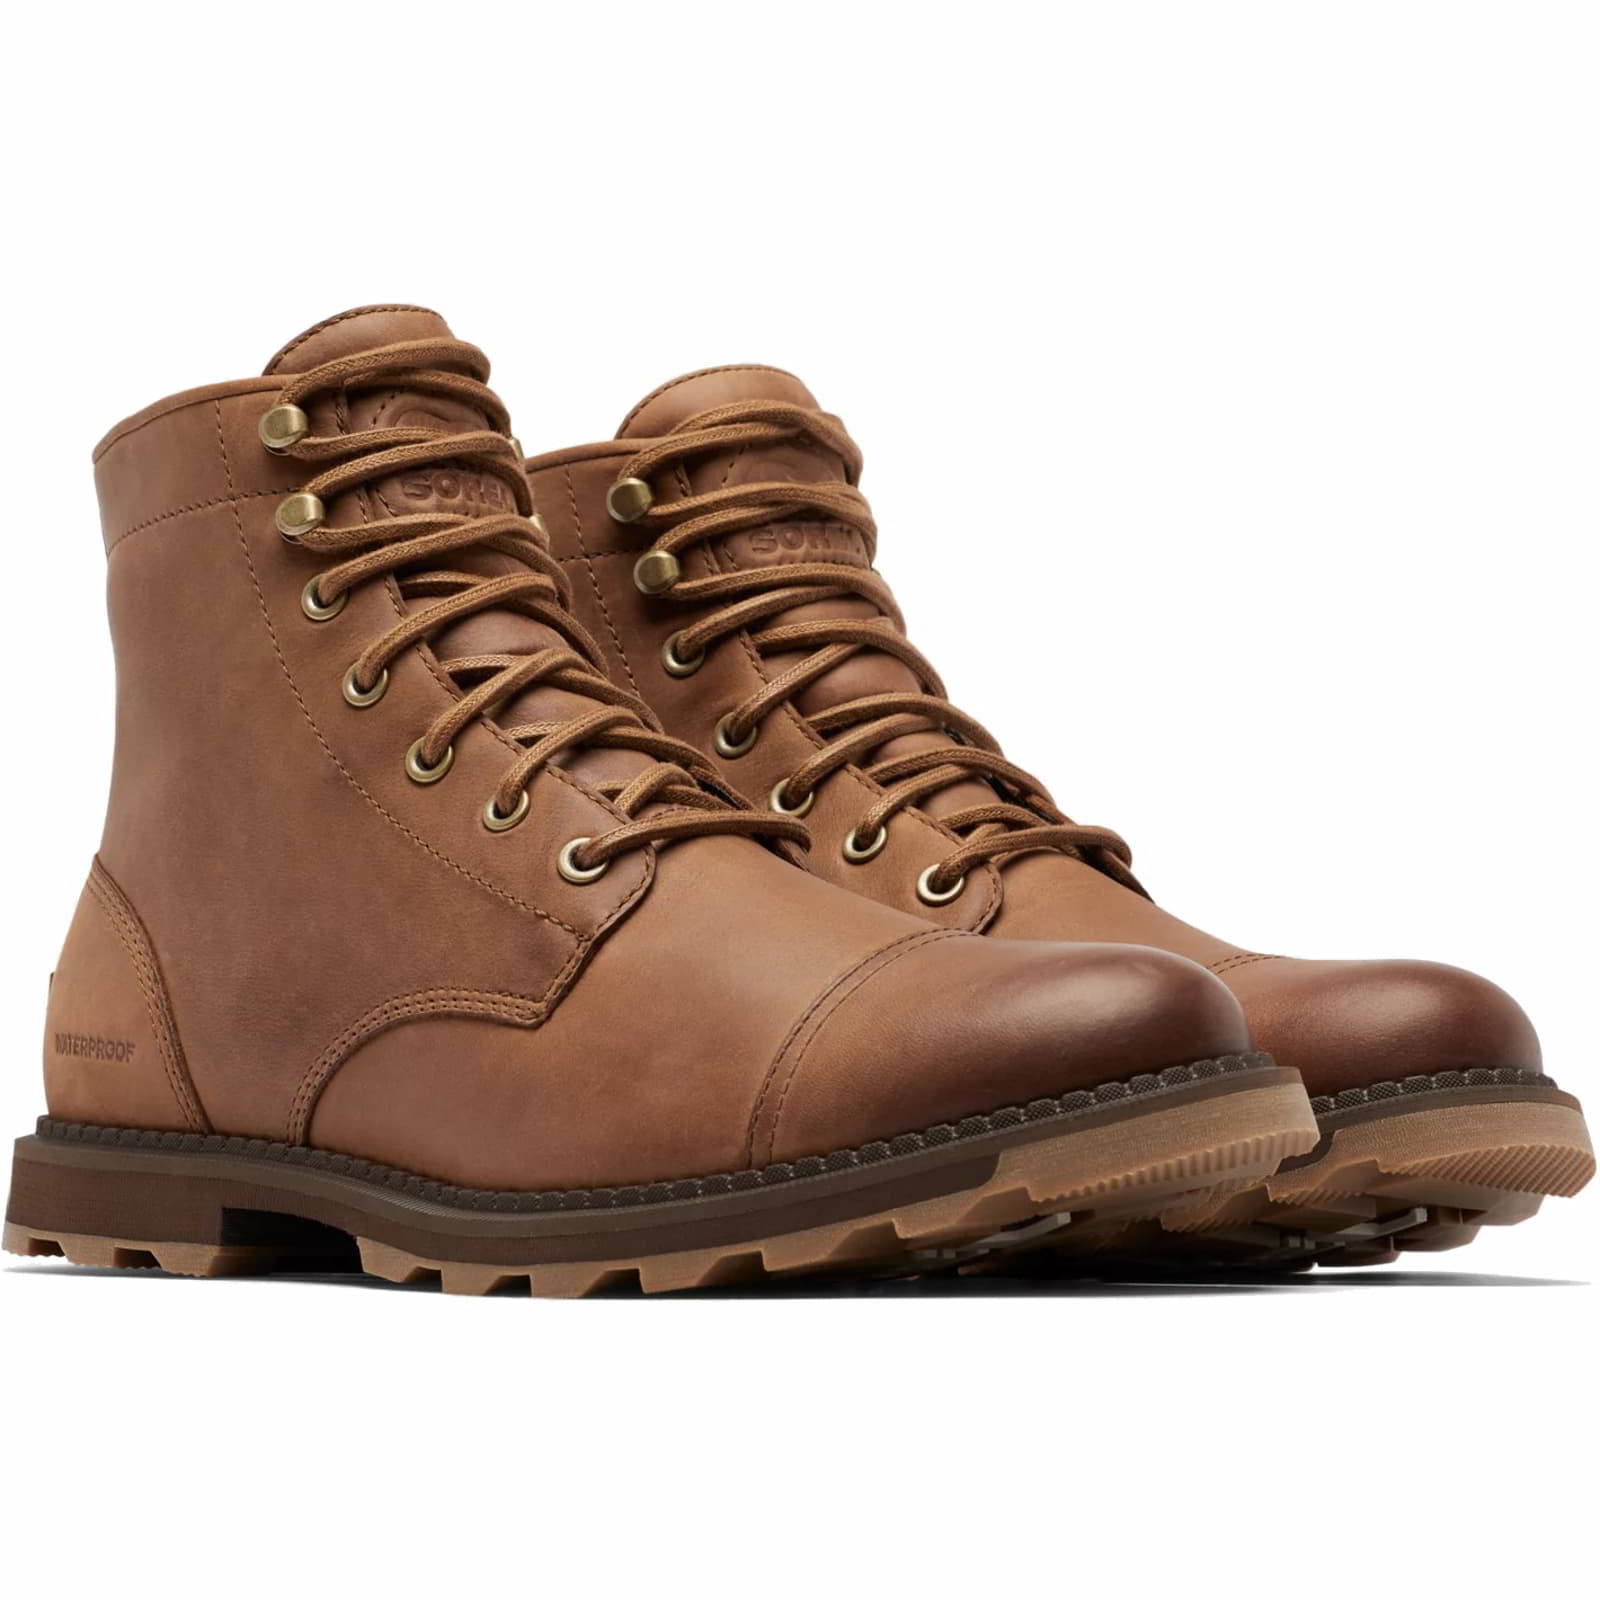 Sorel Men's Madson II Chore Waterproof Ankle Boots - UK 8.5 / US 9.5